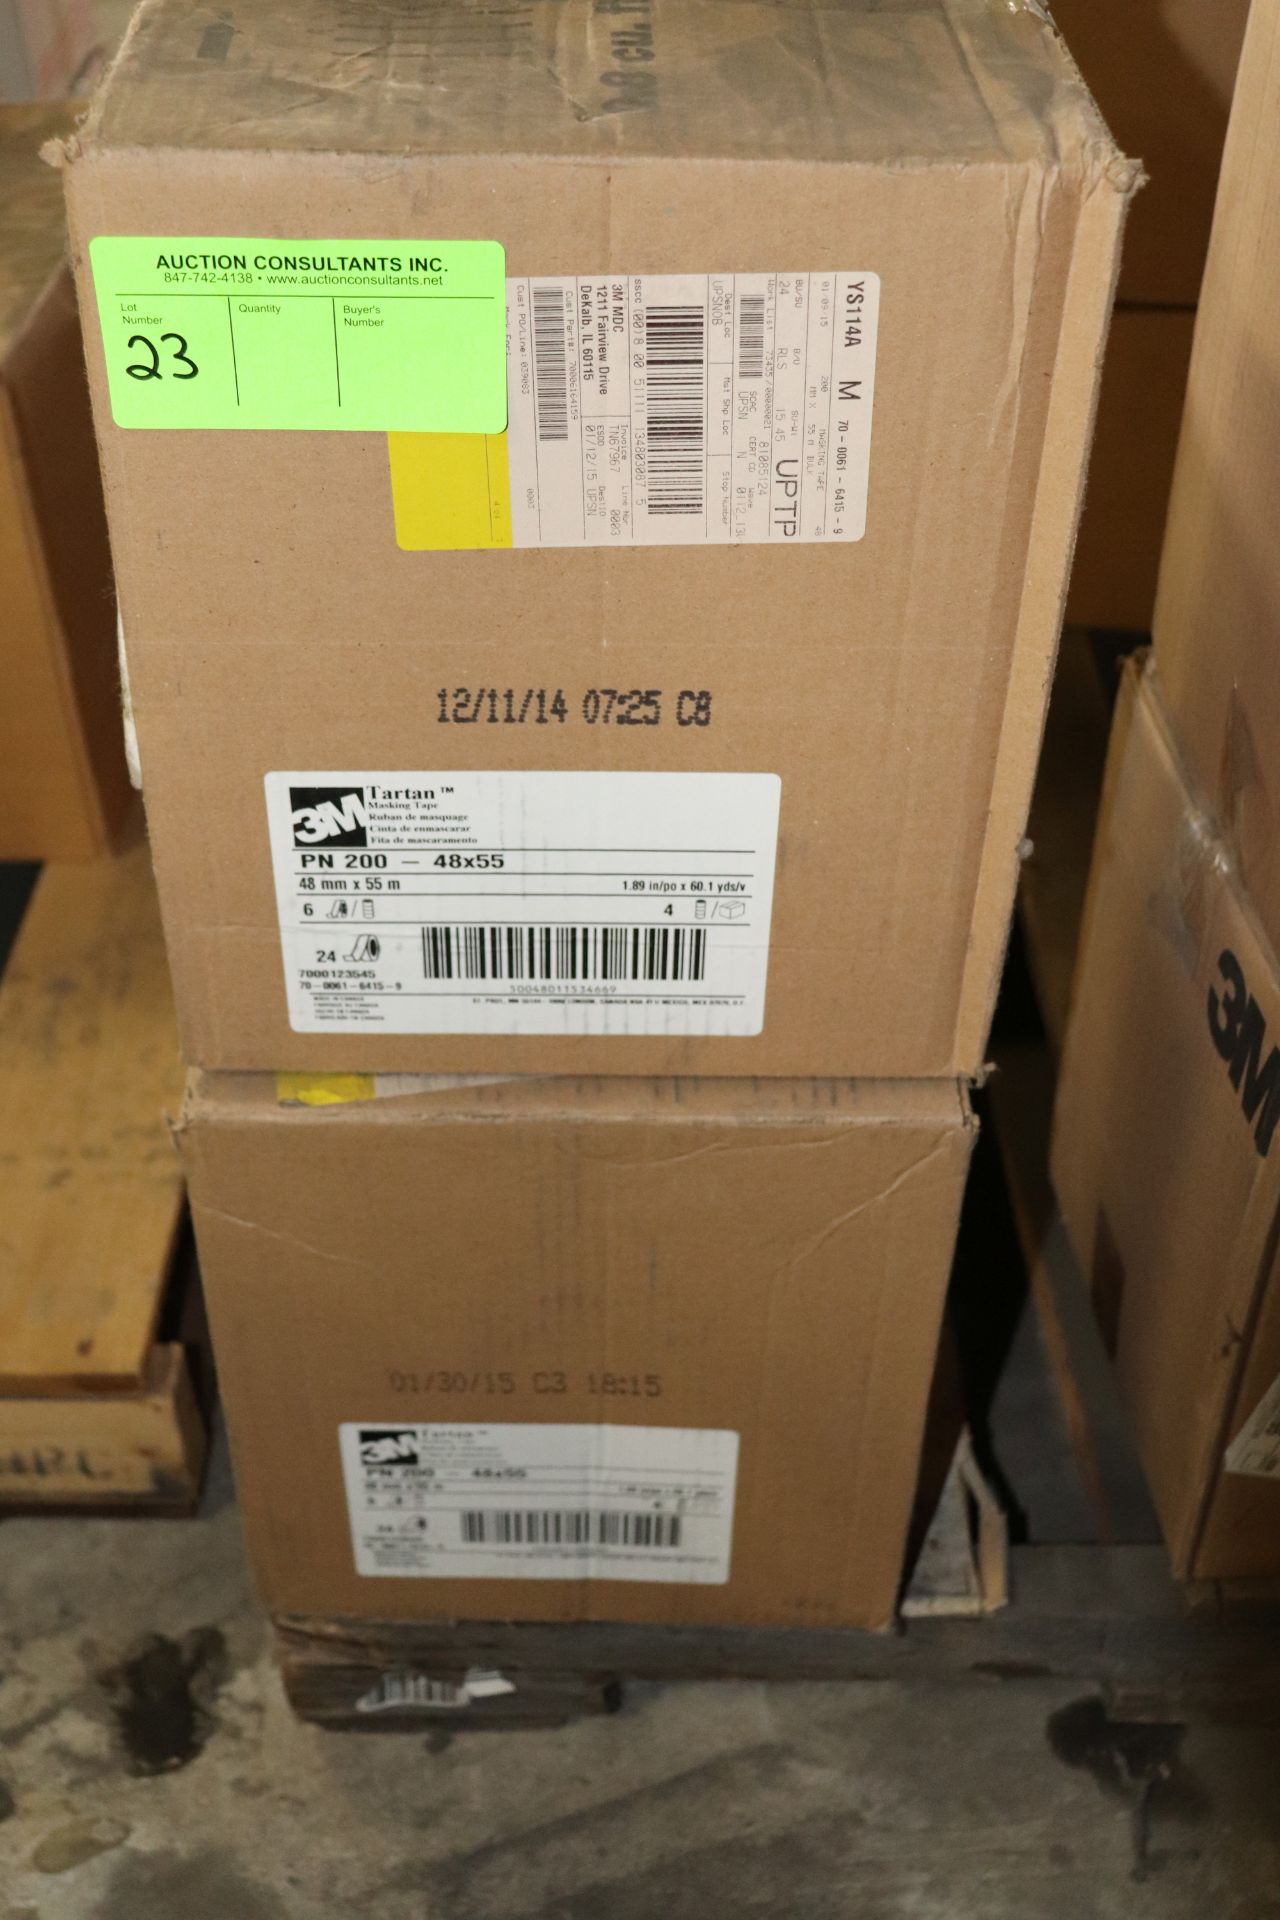 Two cases of 3M Tartan brand masking tape, 48mm x 55m